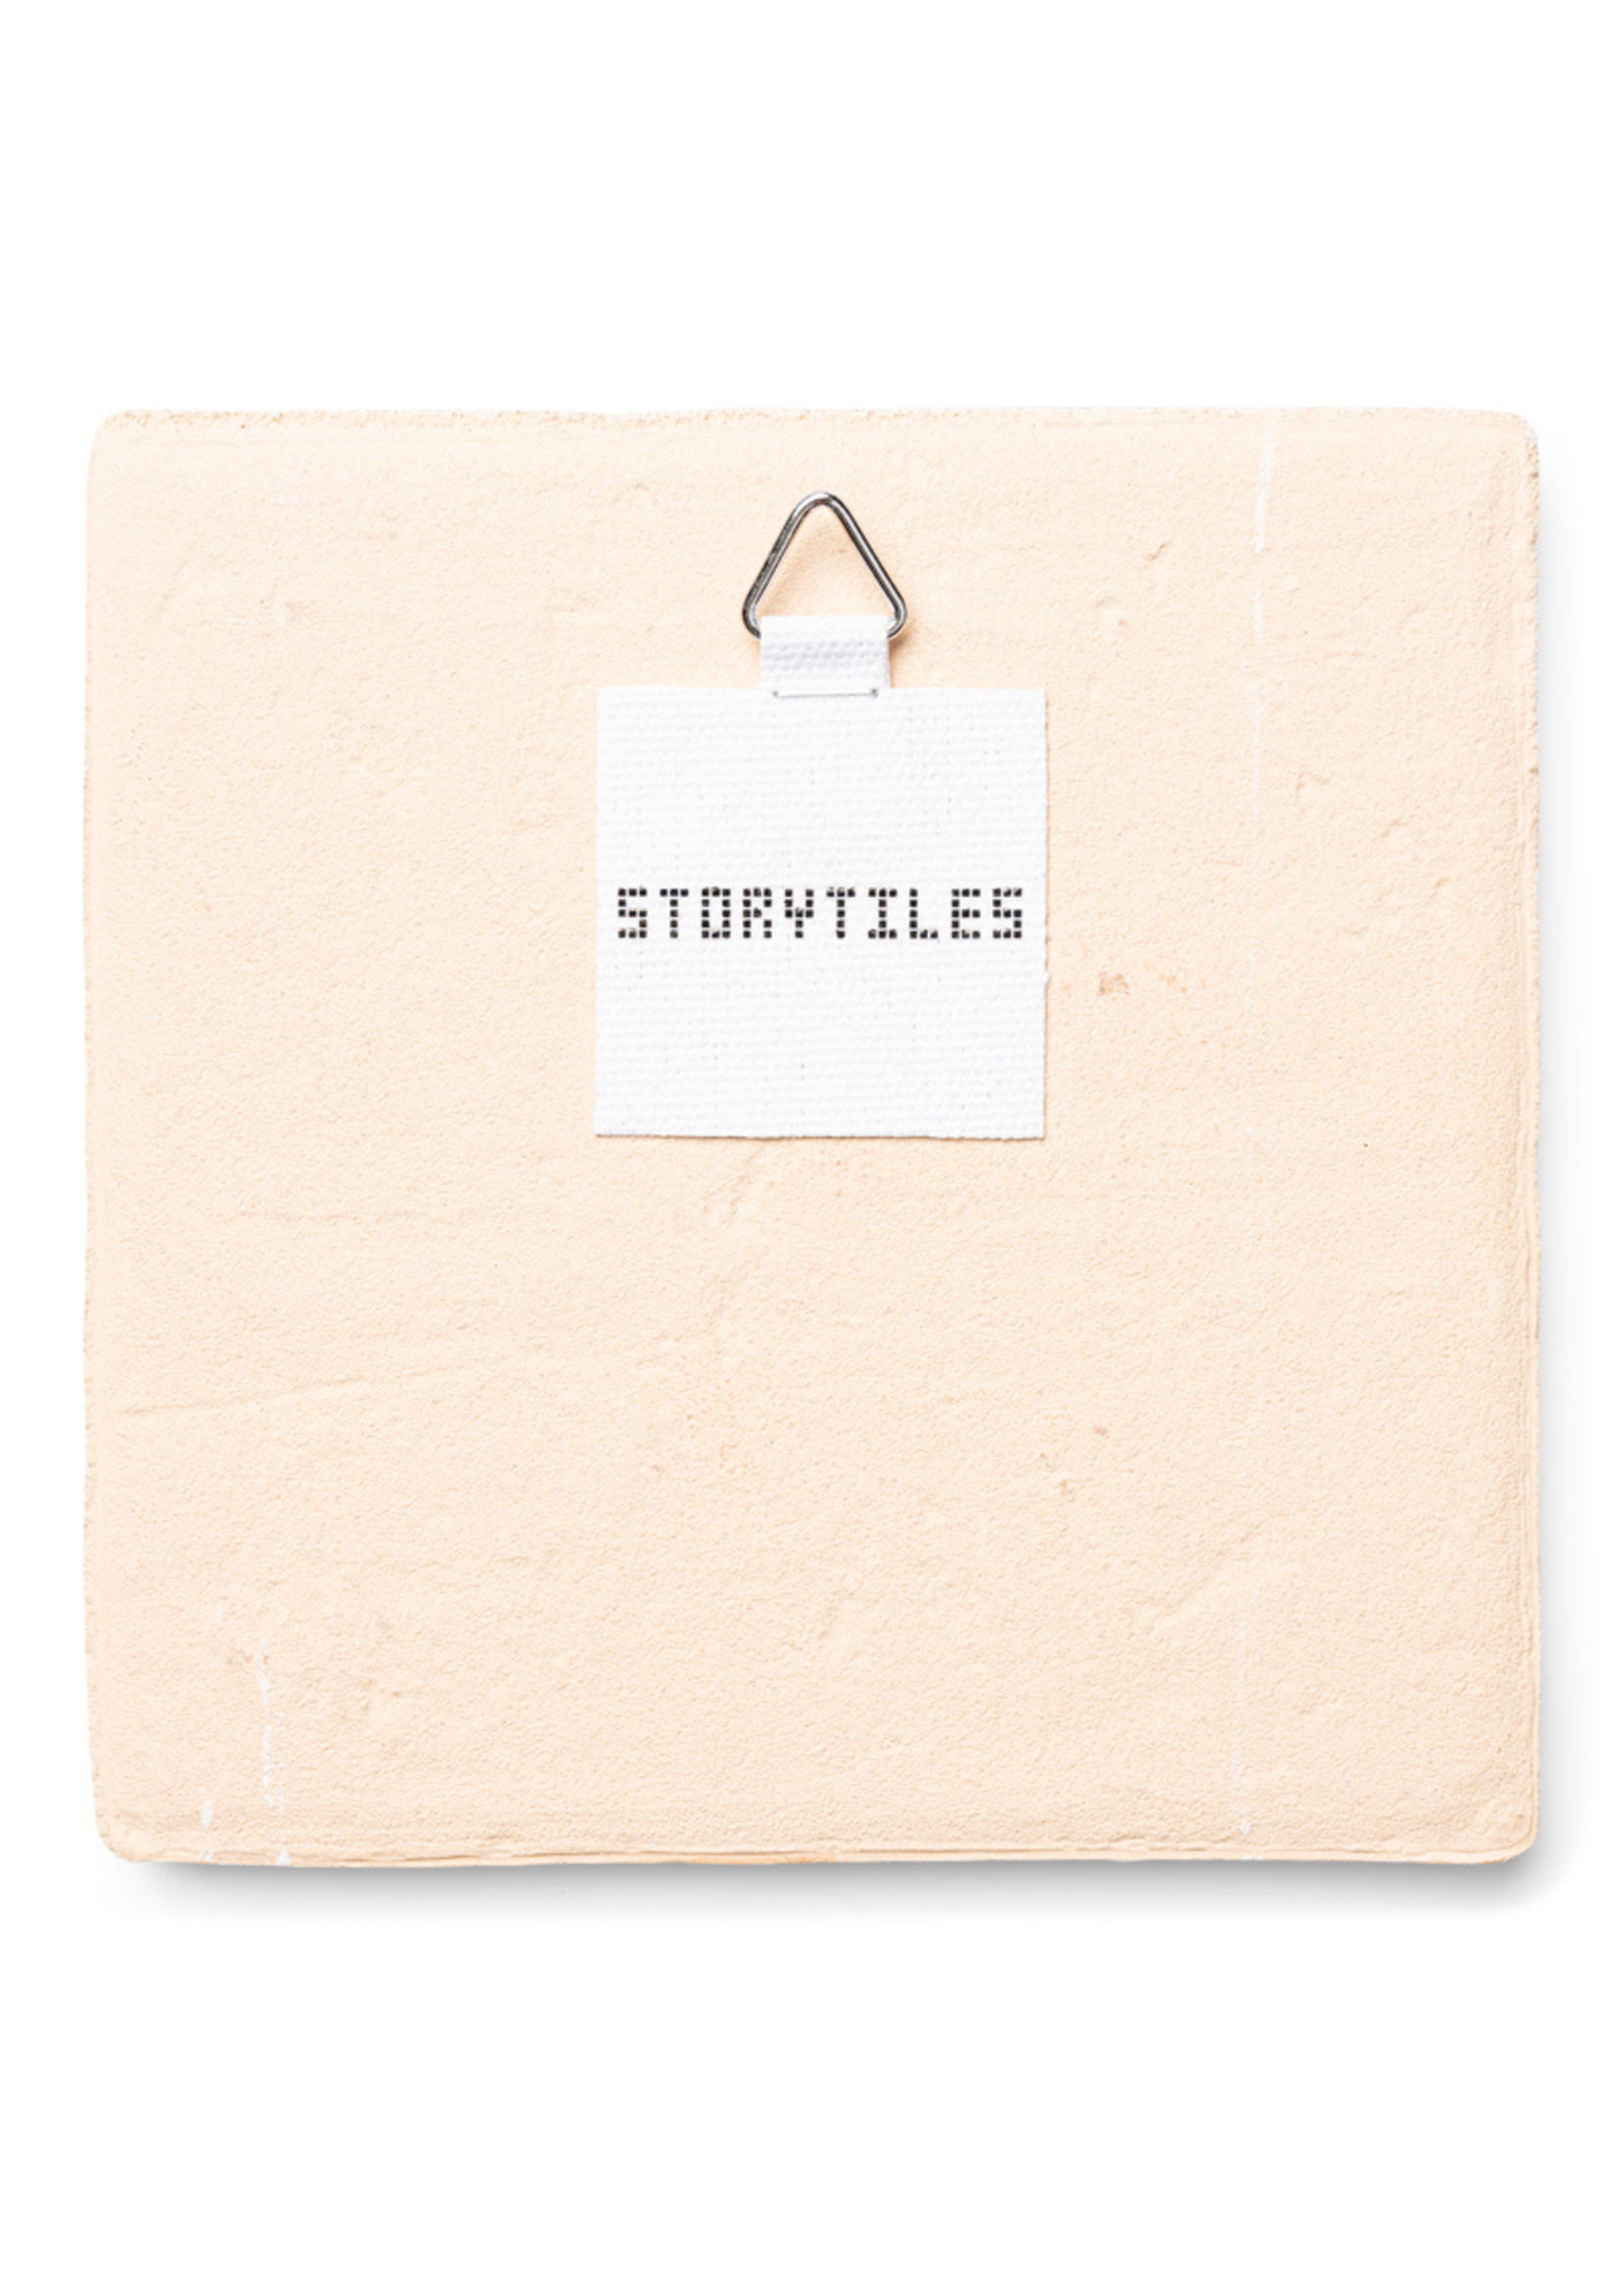 StoryTiles Groots Rotterdam